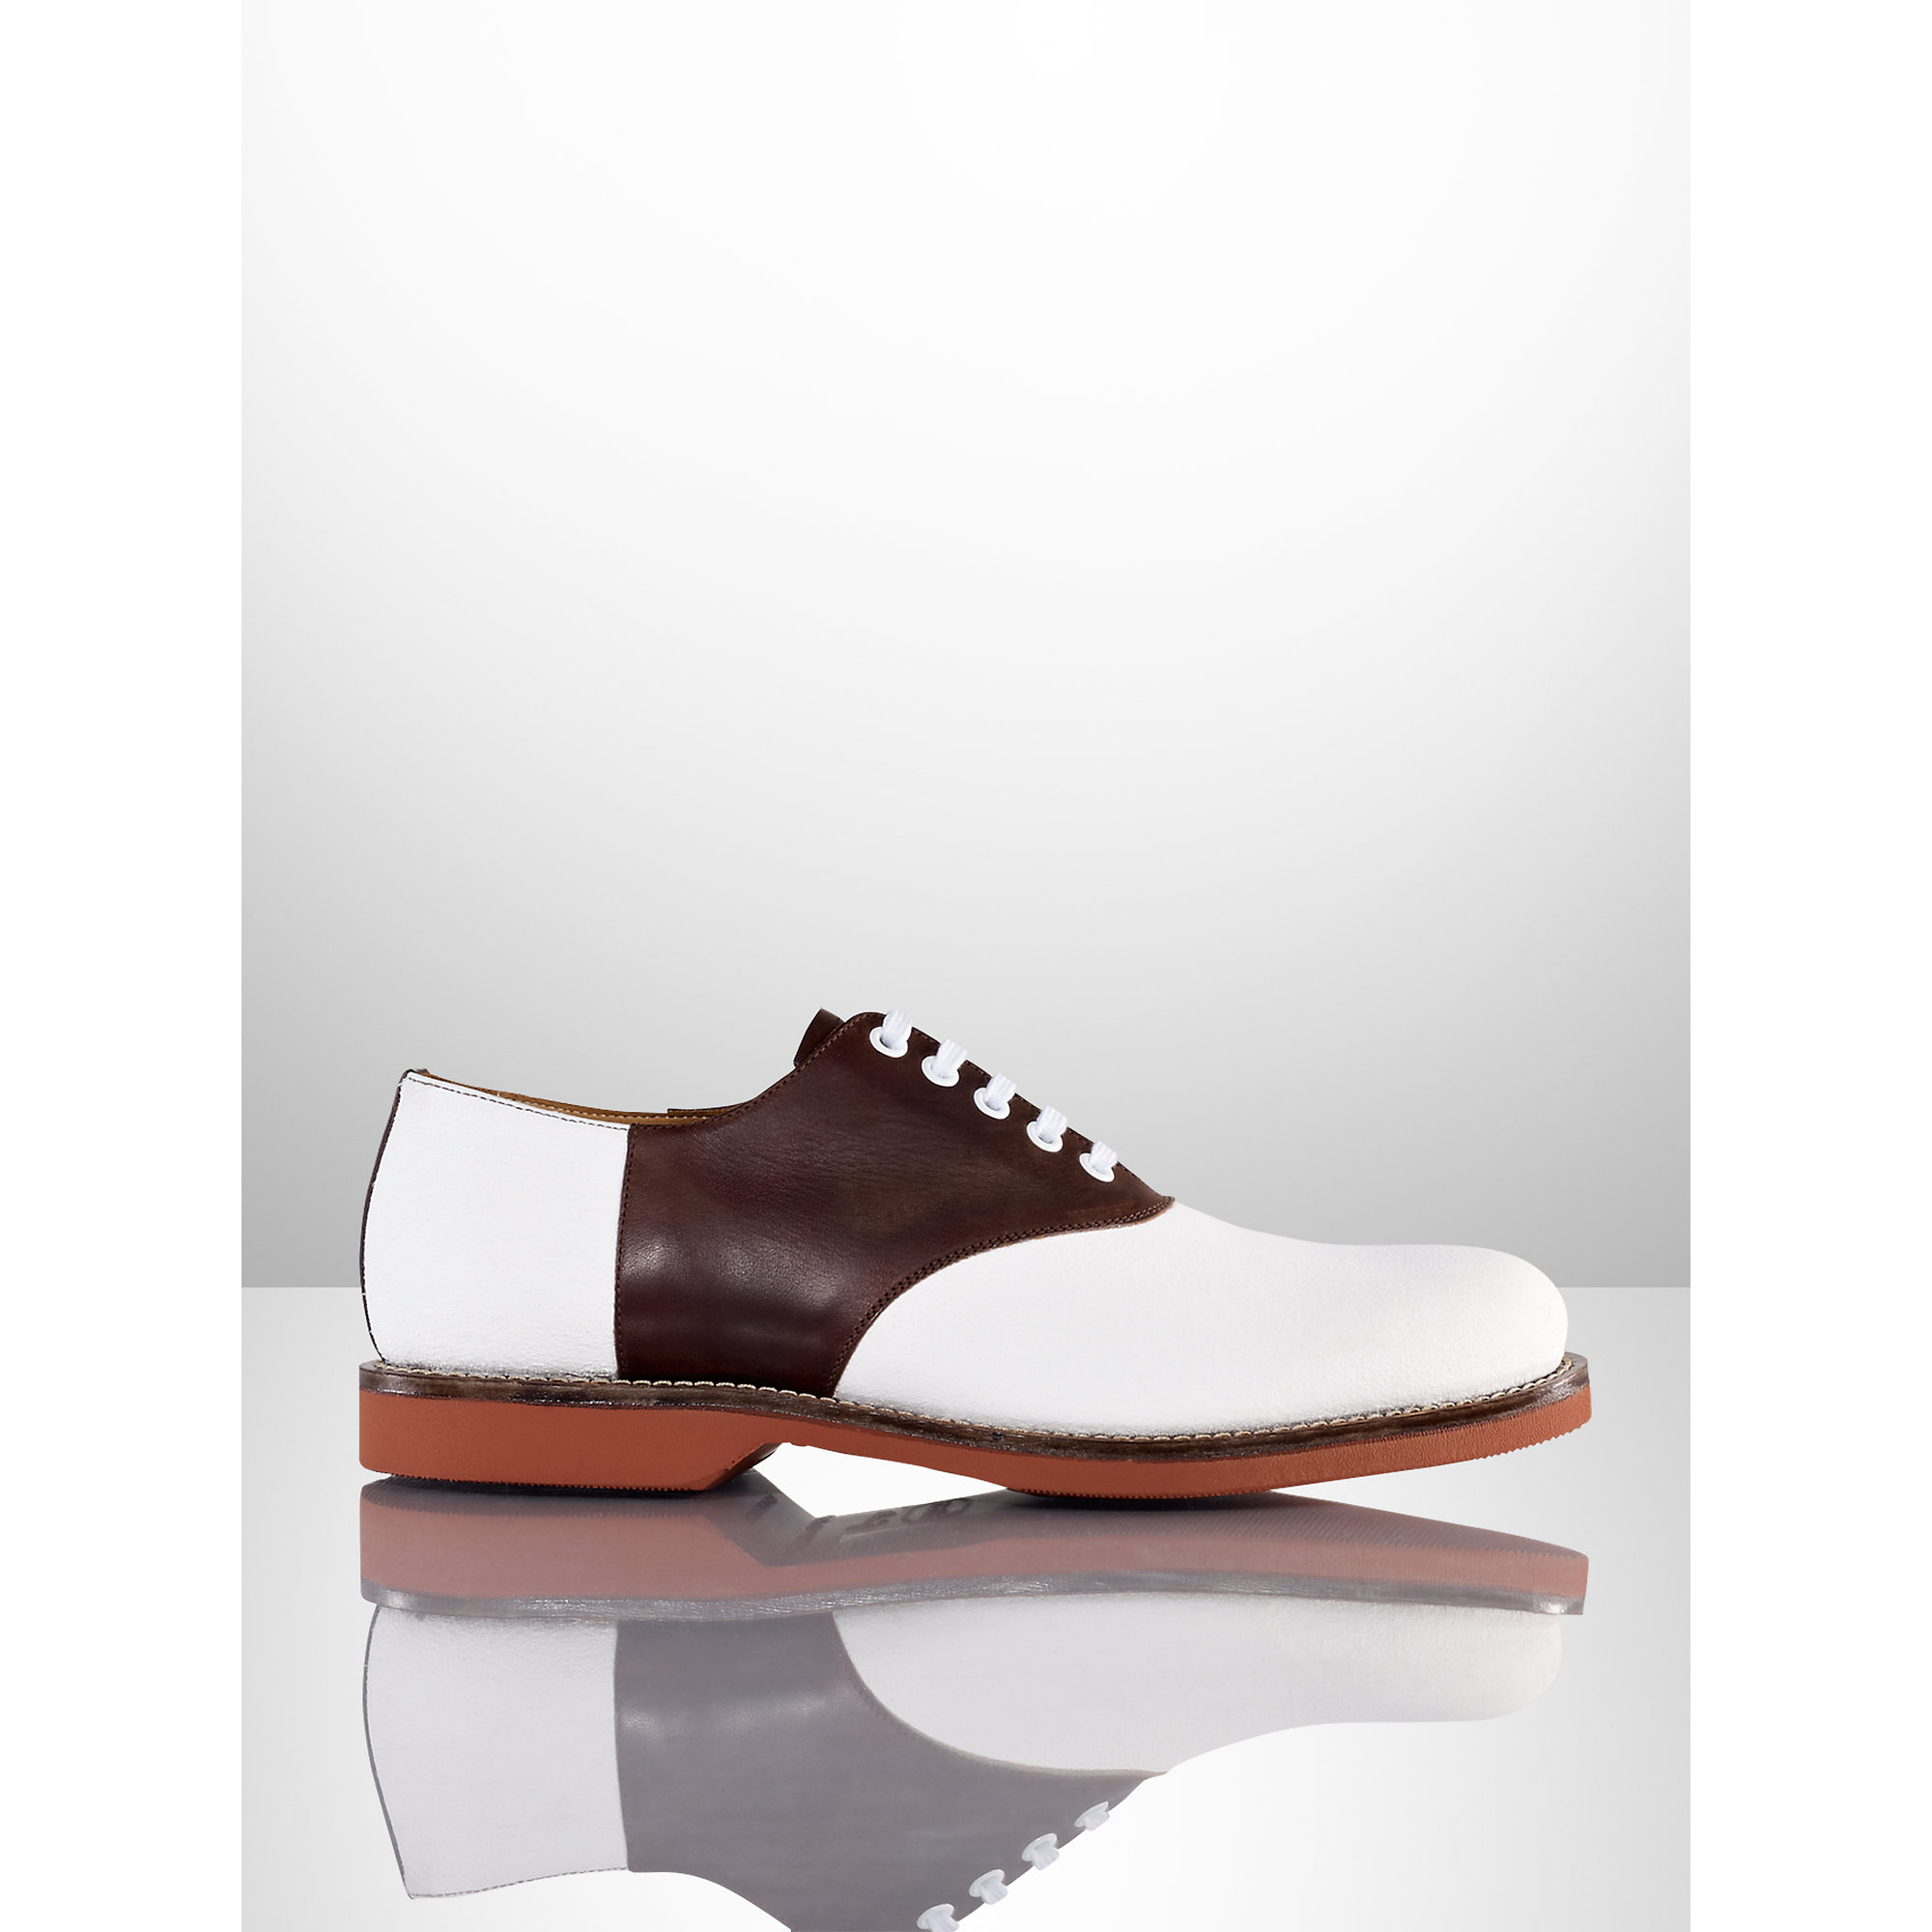 Ralph Lauren Henley Ii Saddle Shoe in White/Brown (White) for Men - Lyst